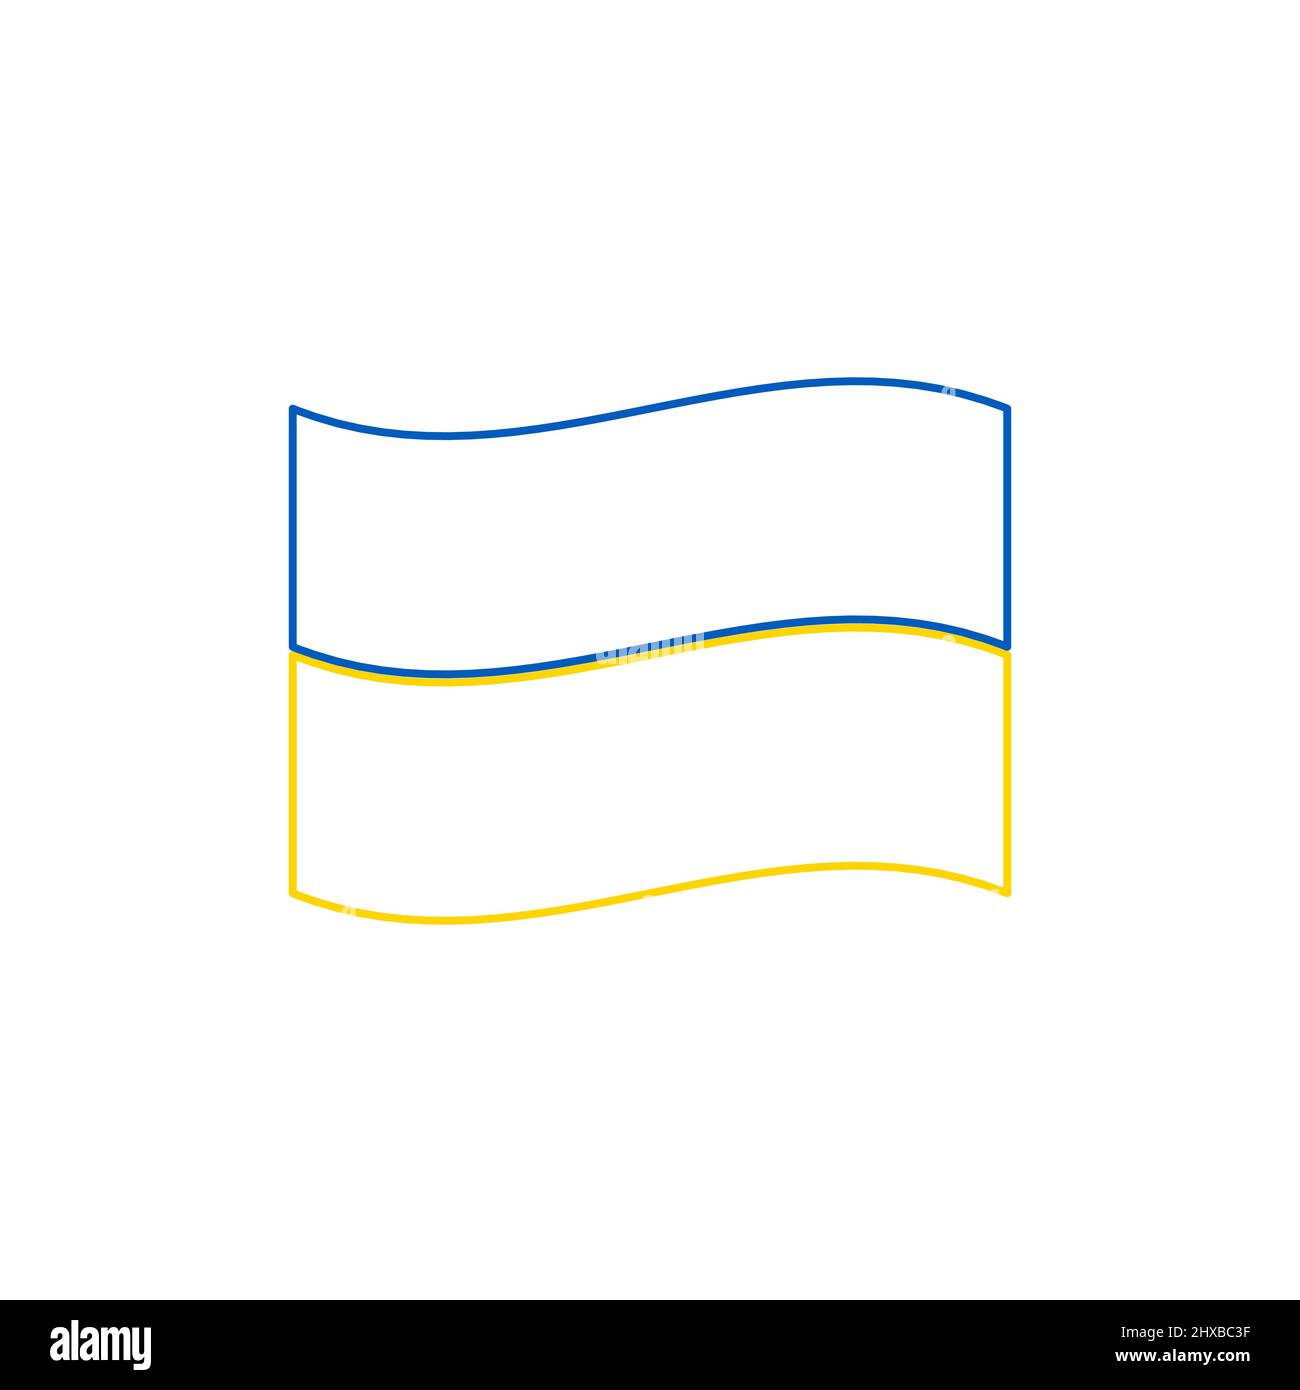 Minimalist linear Ukrainian Flag. Stock vector illustration isolated on white background. Stock Vector